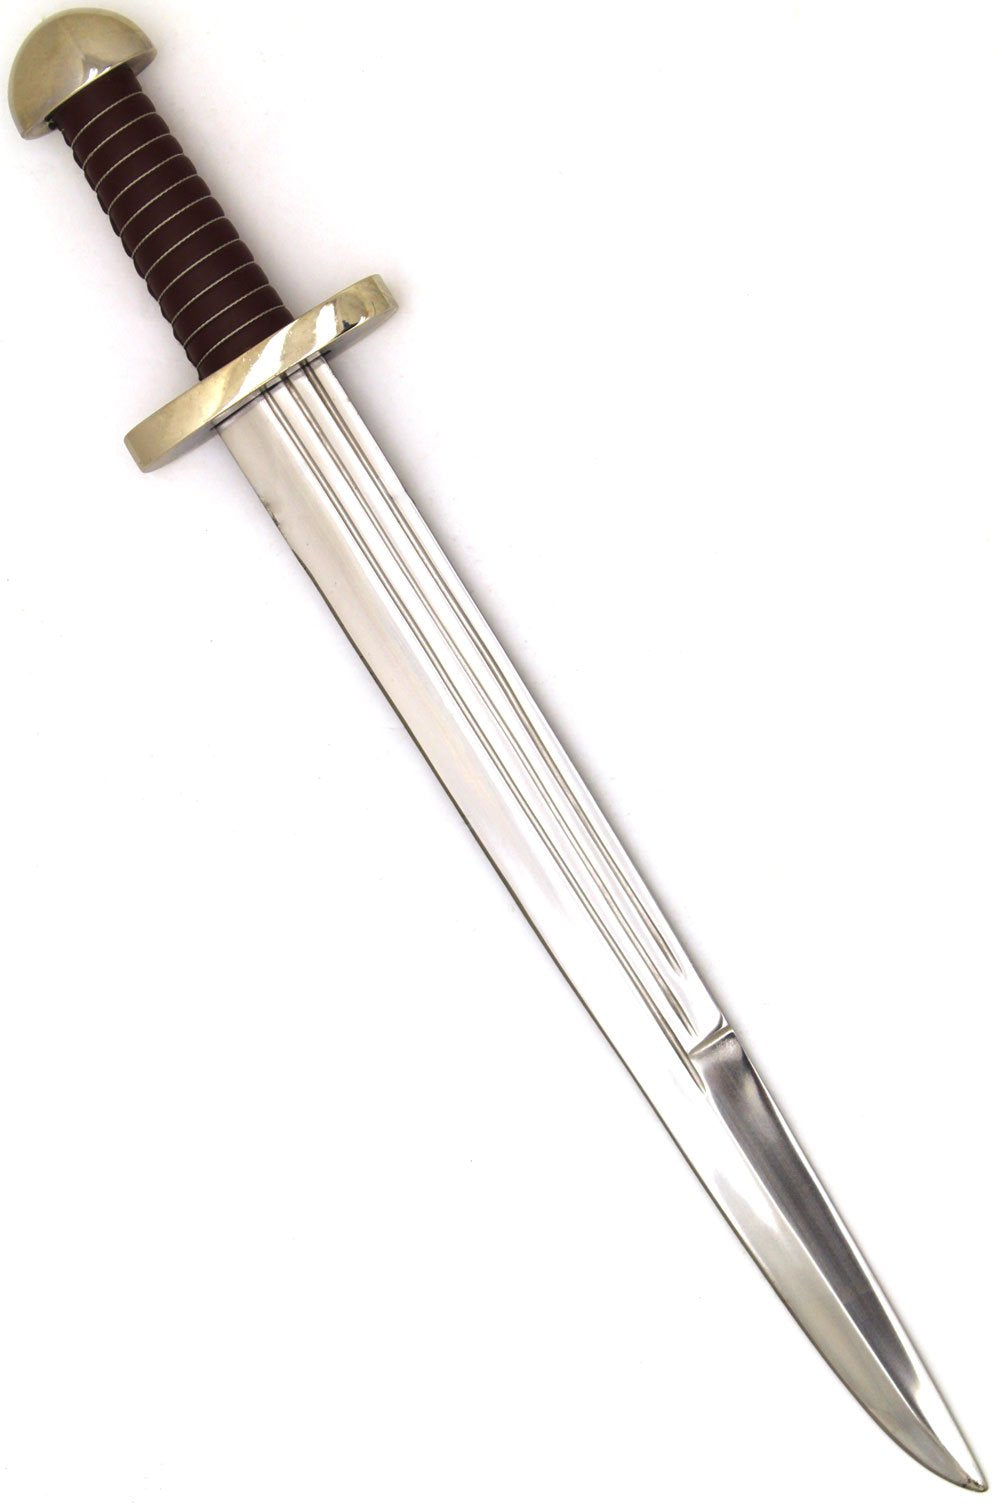 Medieval Warrior 10th Century Full Tang High Carbon Steel Viking Seax Style Dagger w/Leather Sheath Fully Functional Battle Ready Razor Sharp